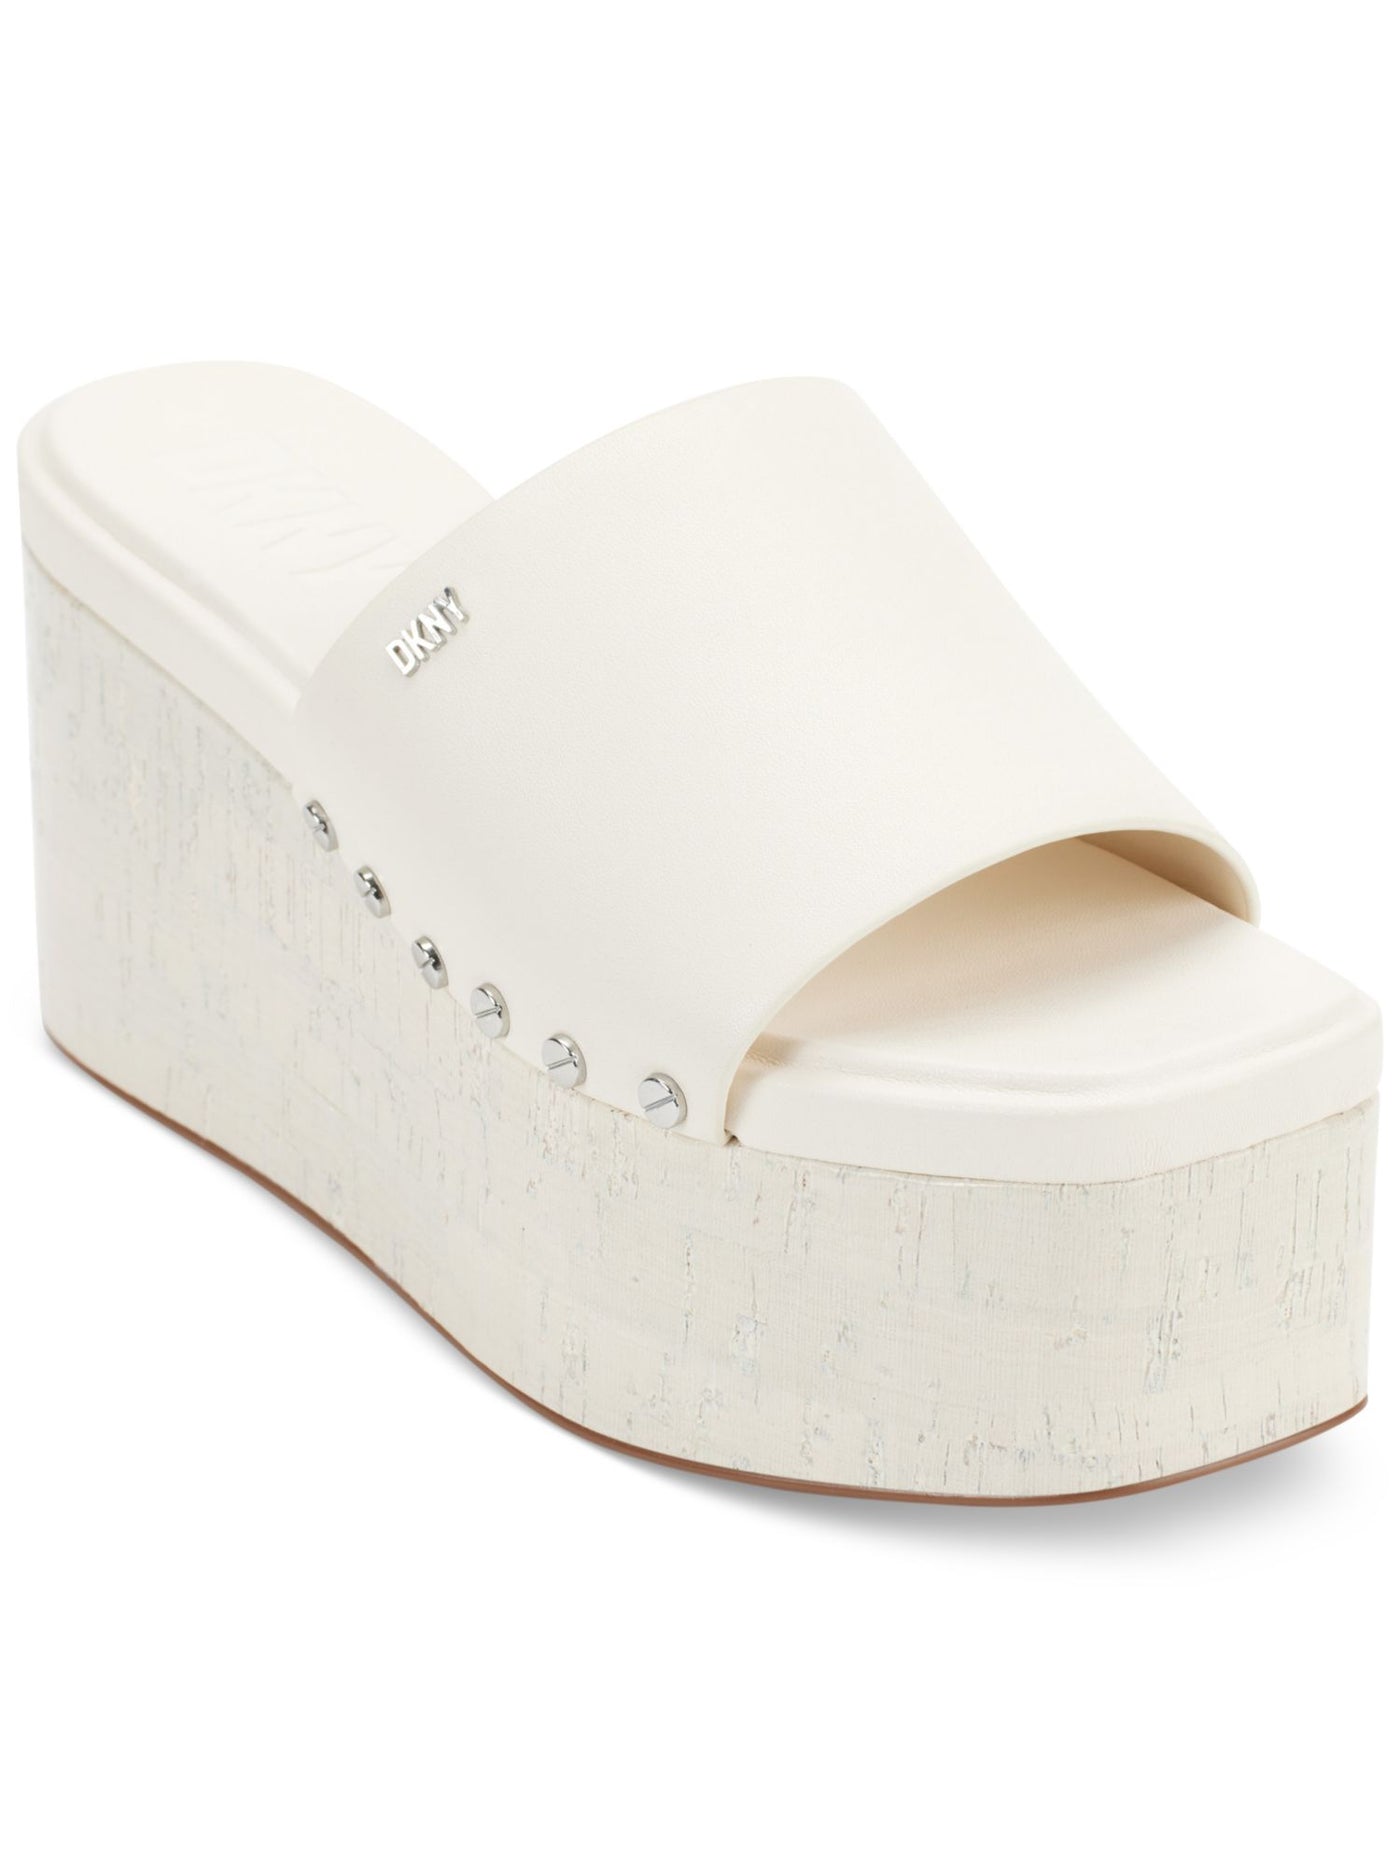 DKNY Womens Ivory Goring Studded Alvy Almond Toe Platform Slip On Leather Slide Sandals Shoes 9